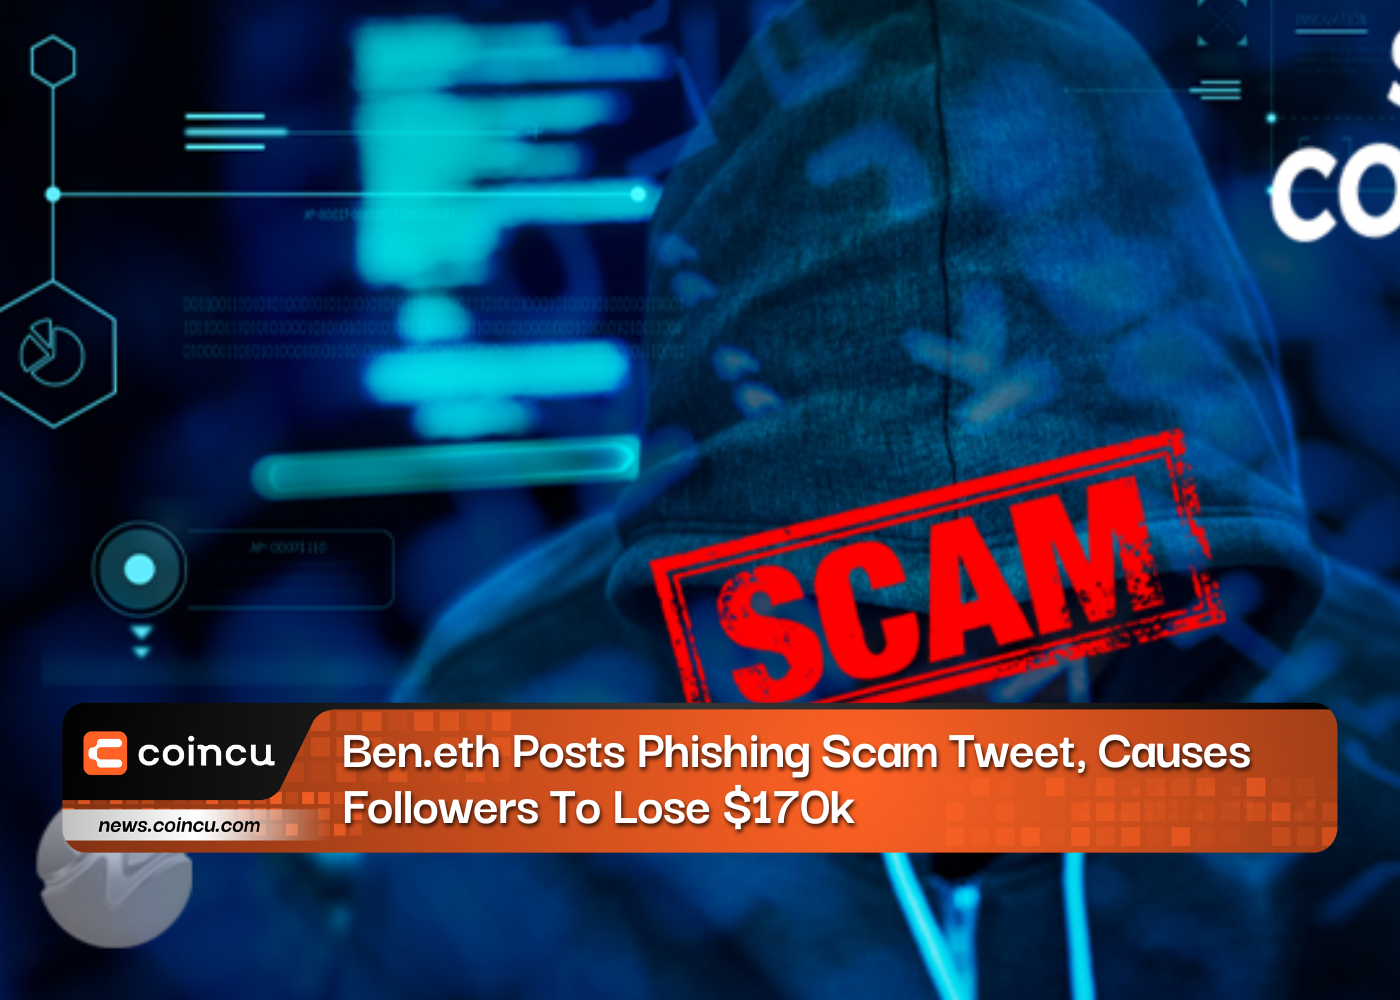 Ben.eth Posts Phishing Scam Tweet, Causes Followers To Lose $170k